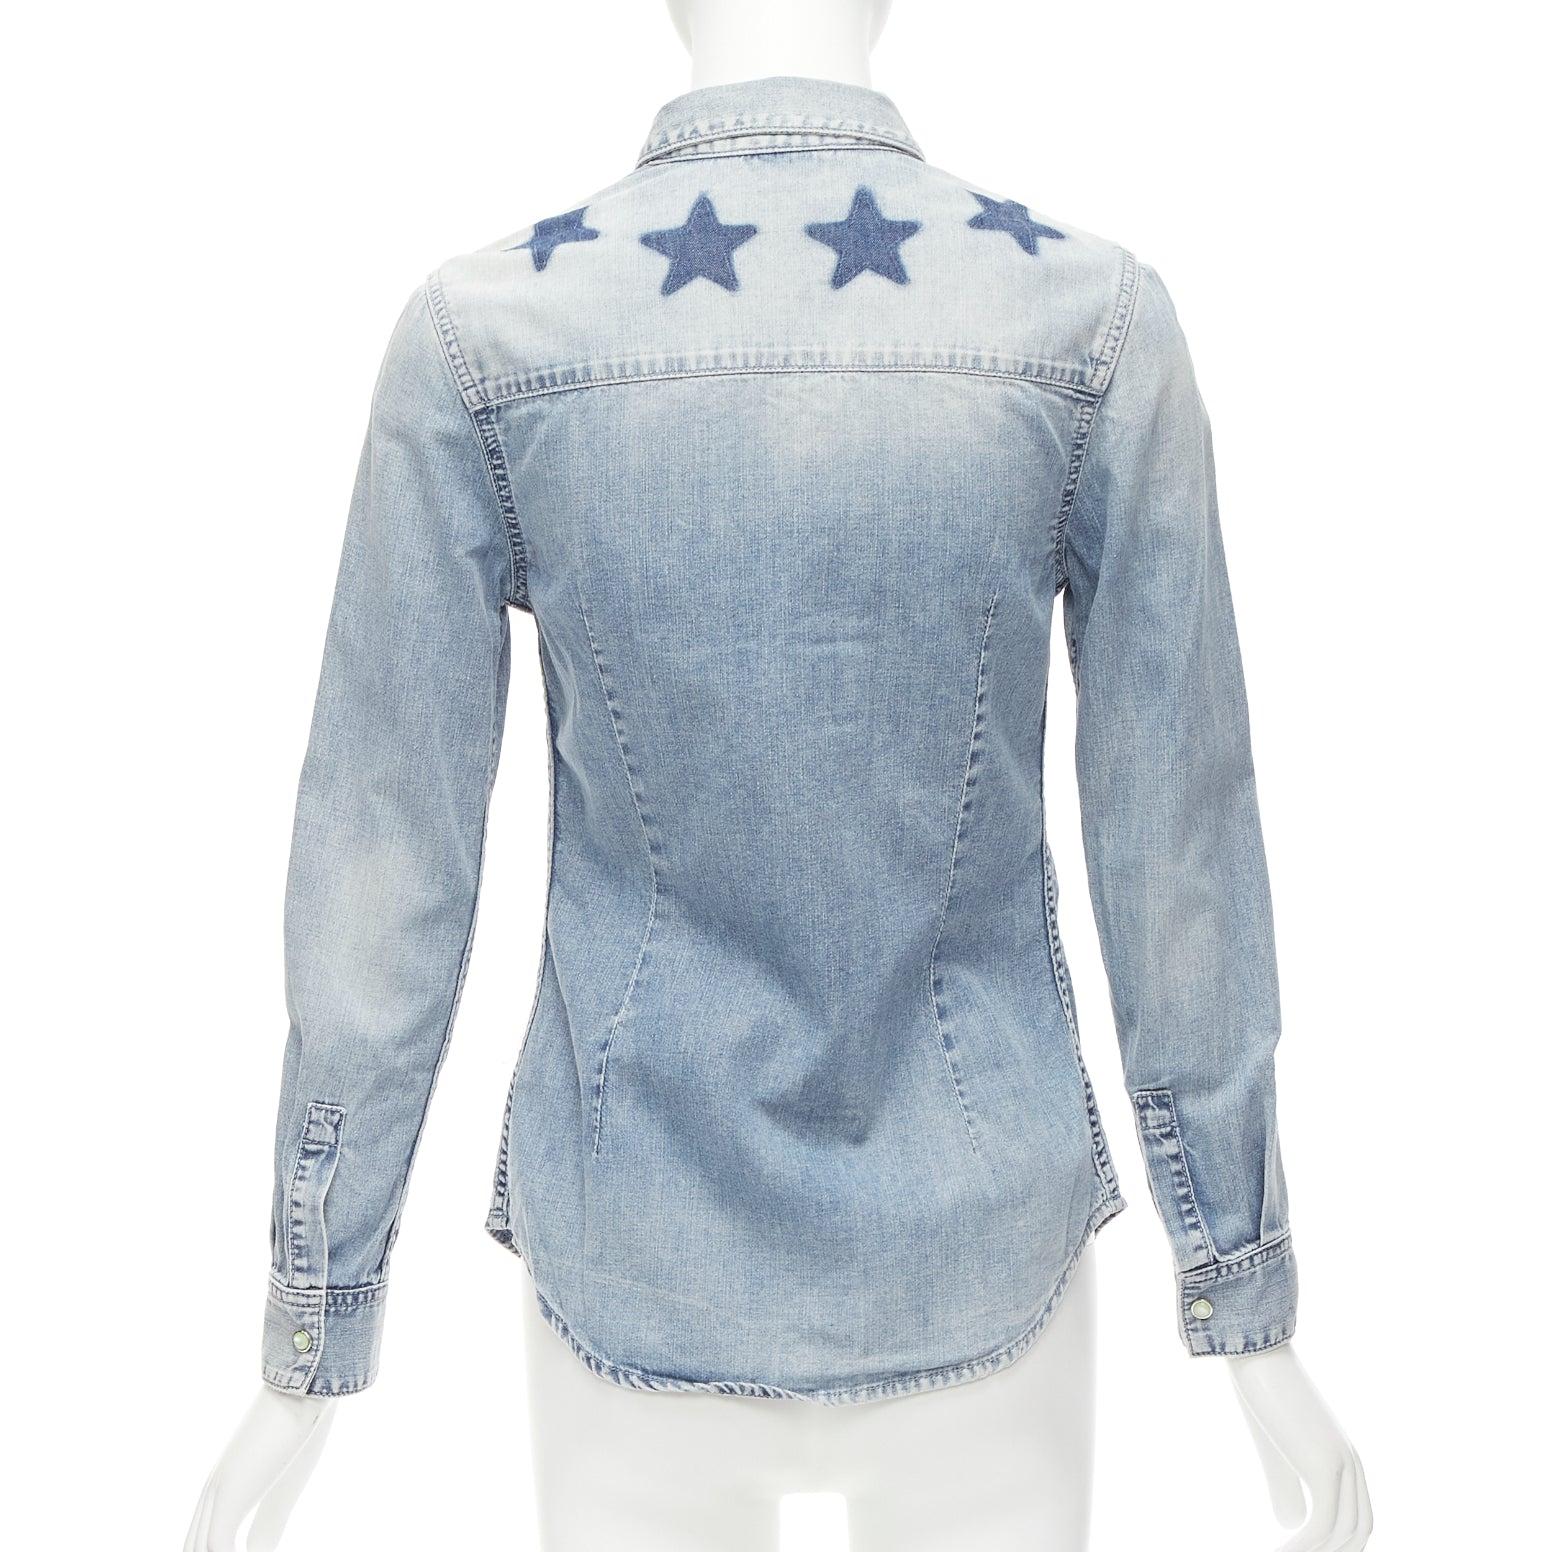 GIVENCHY Riccardo Tisci blue distressed denim star collar dress shirt FR36 S For Sale 2